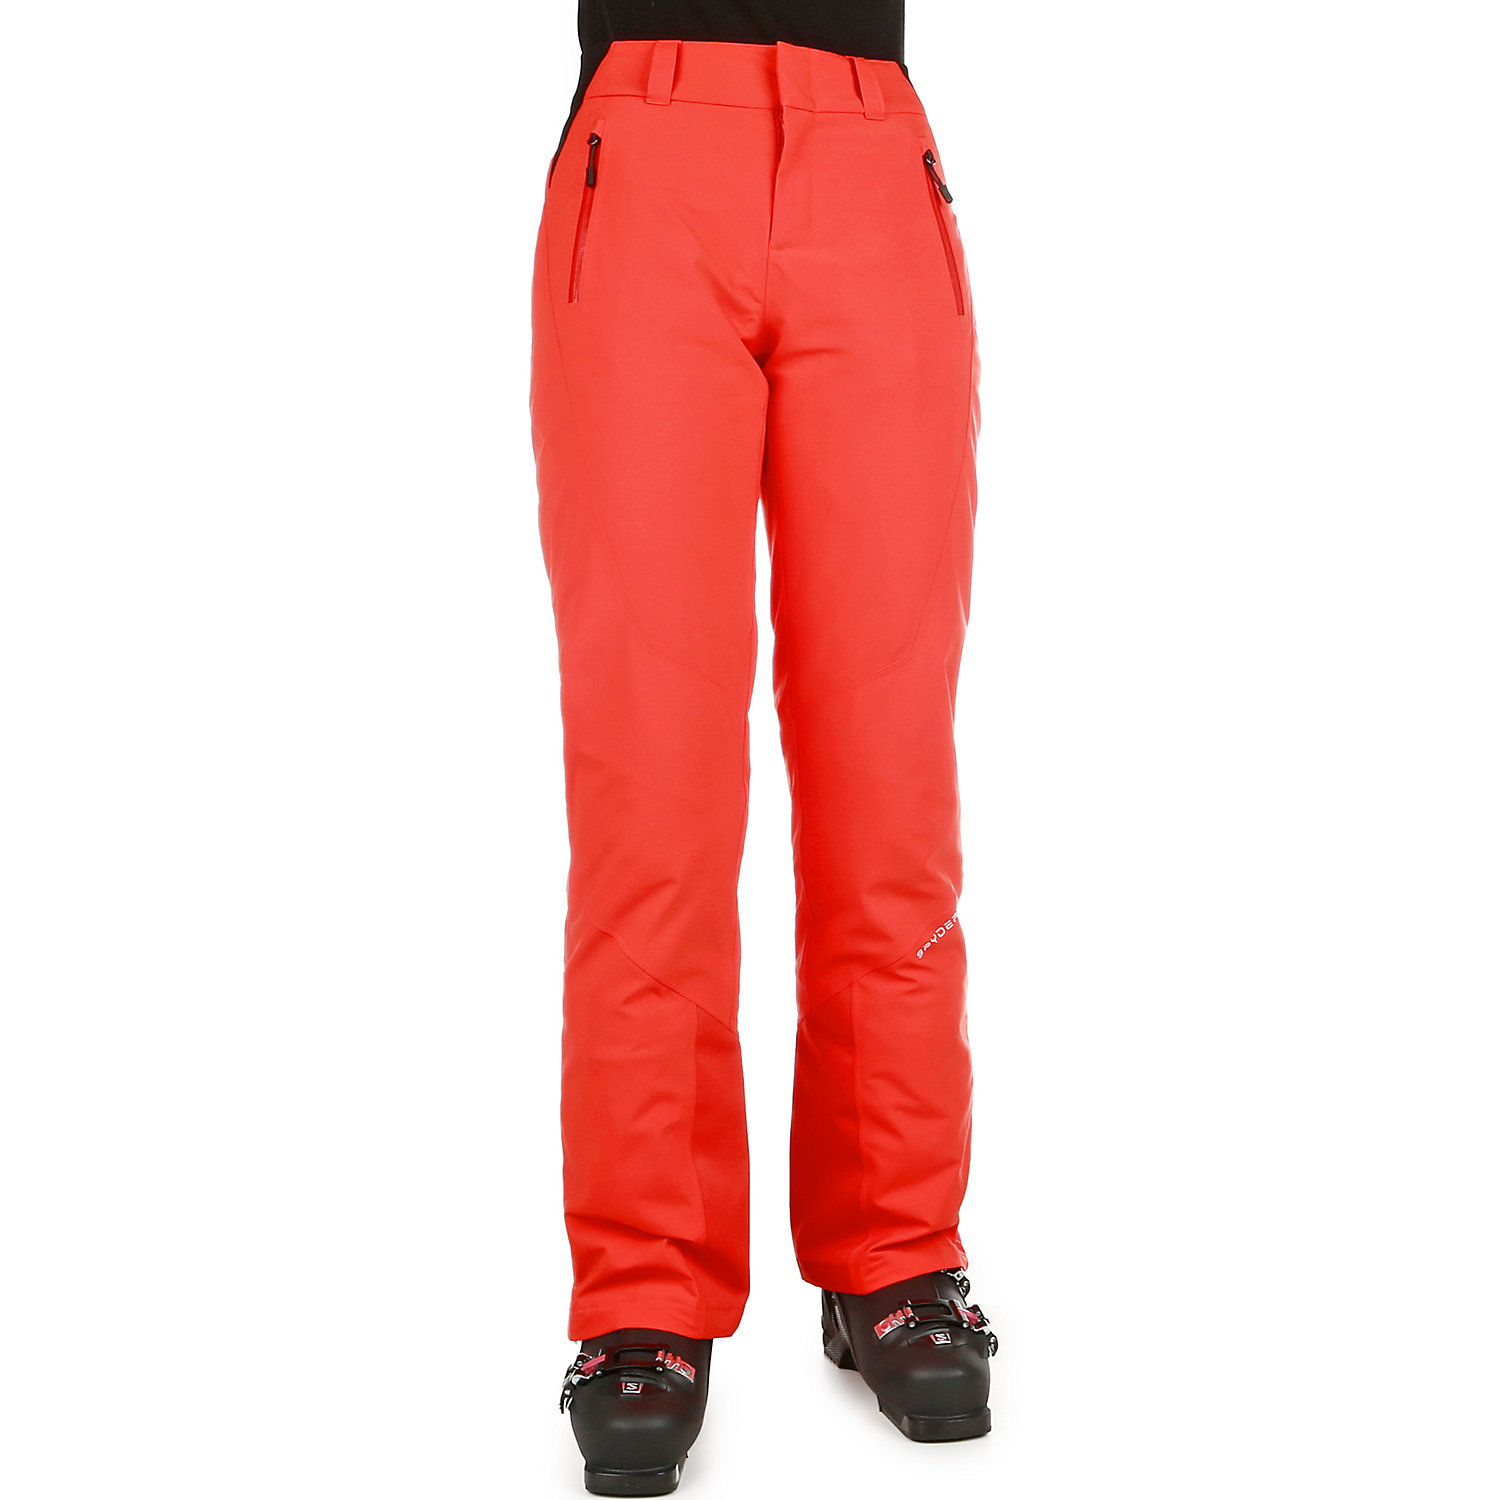 SPYDER Women's Red Winter Tailored Pants 